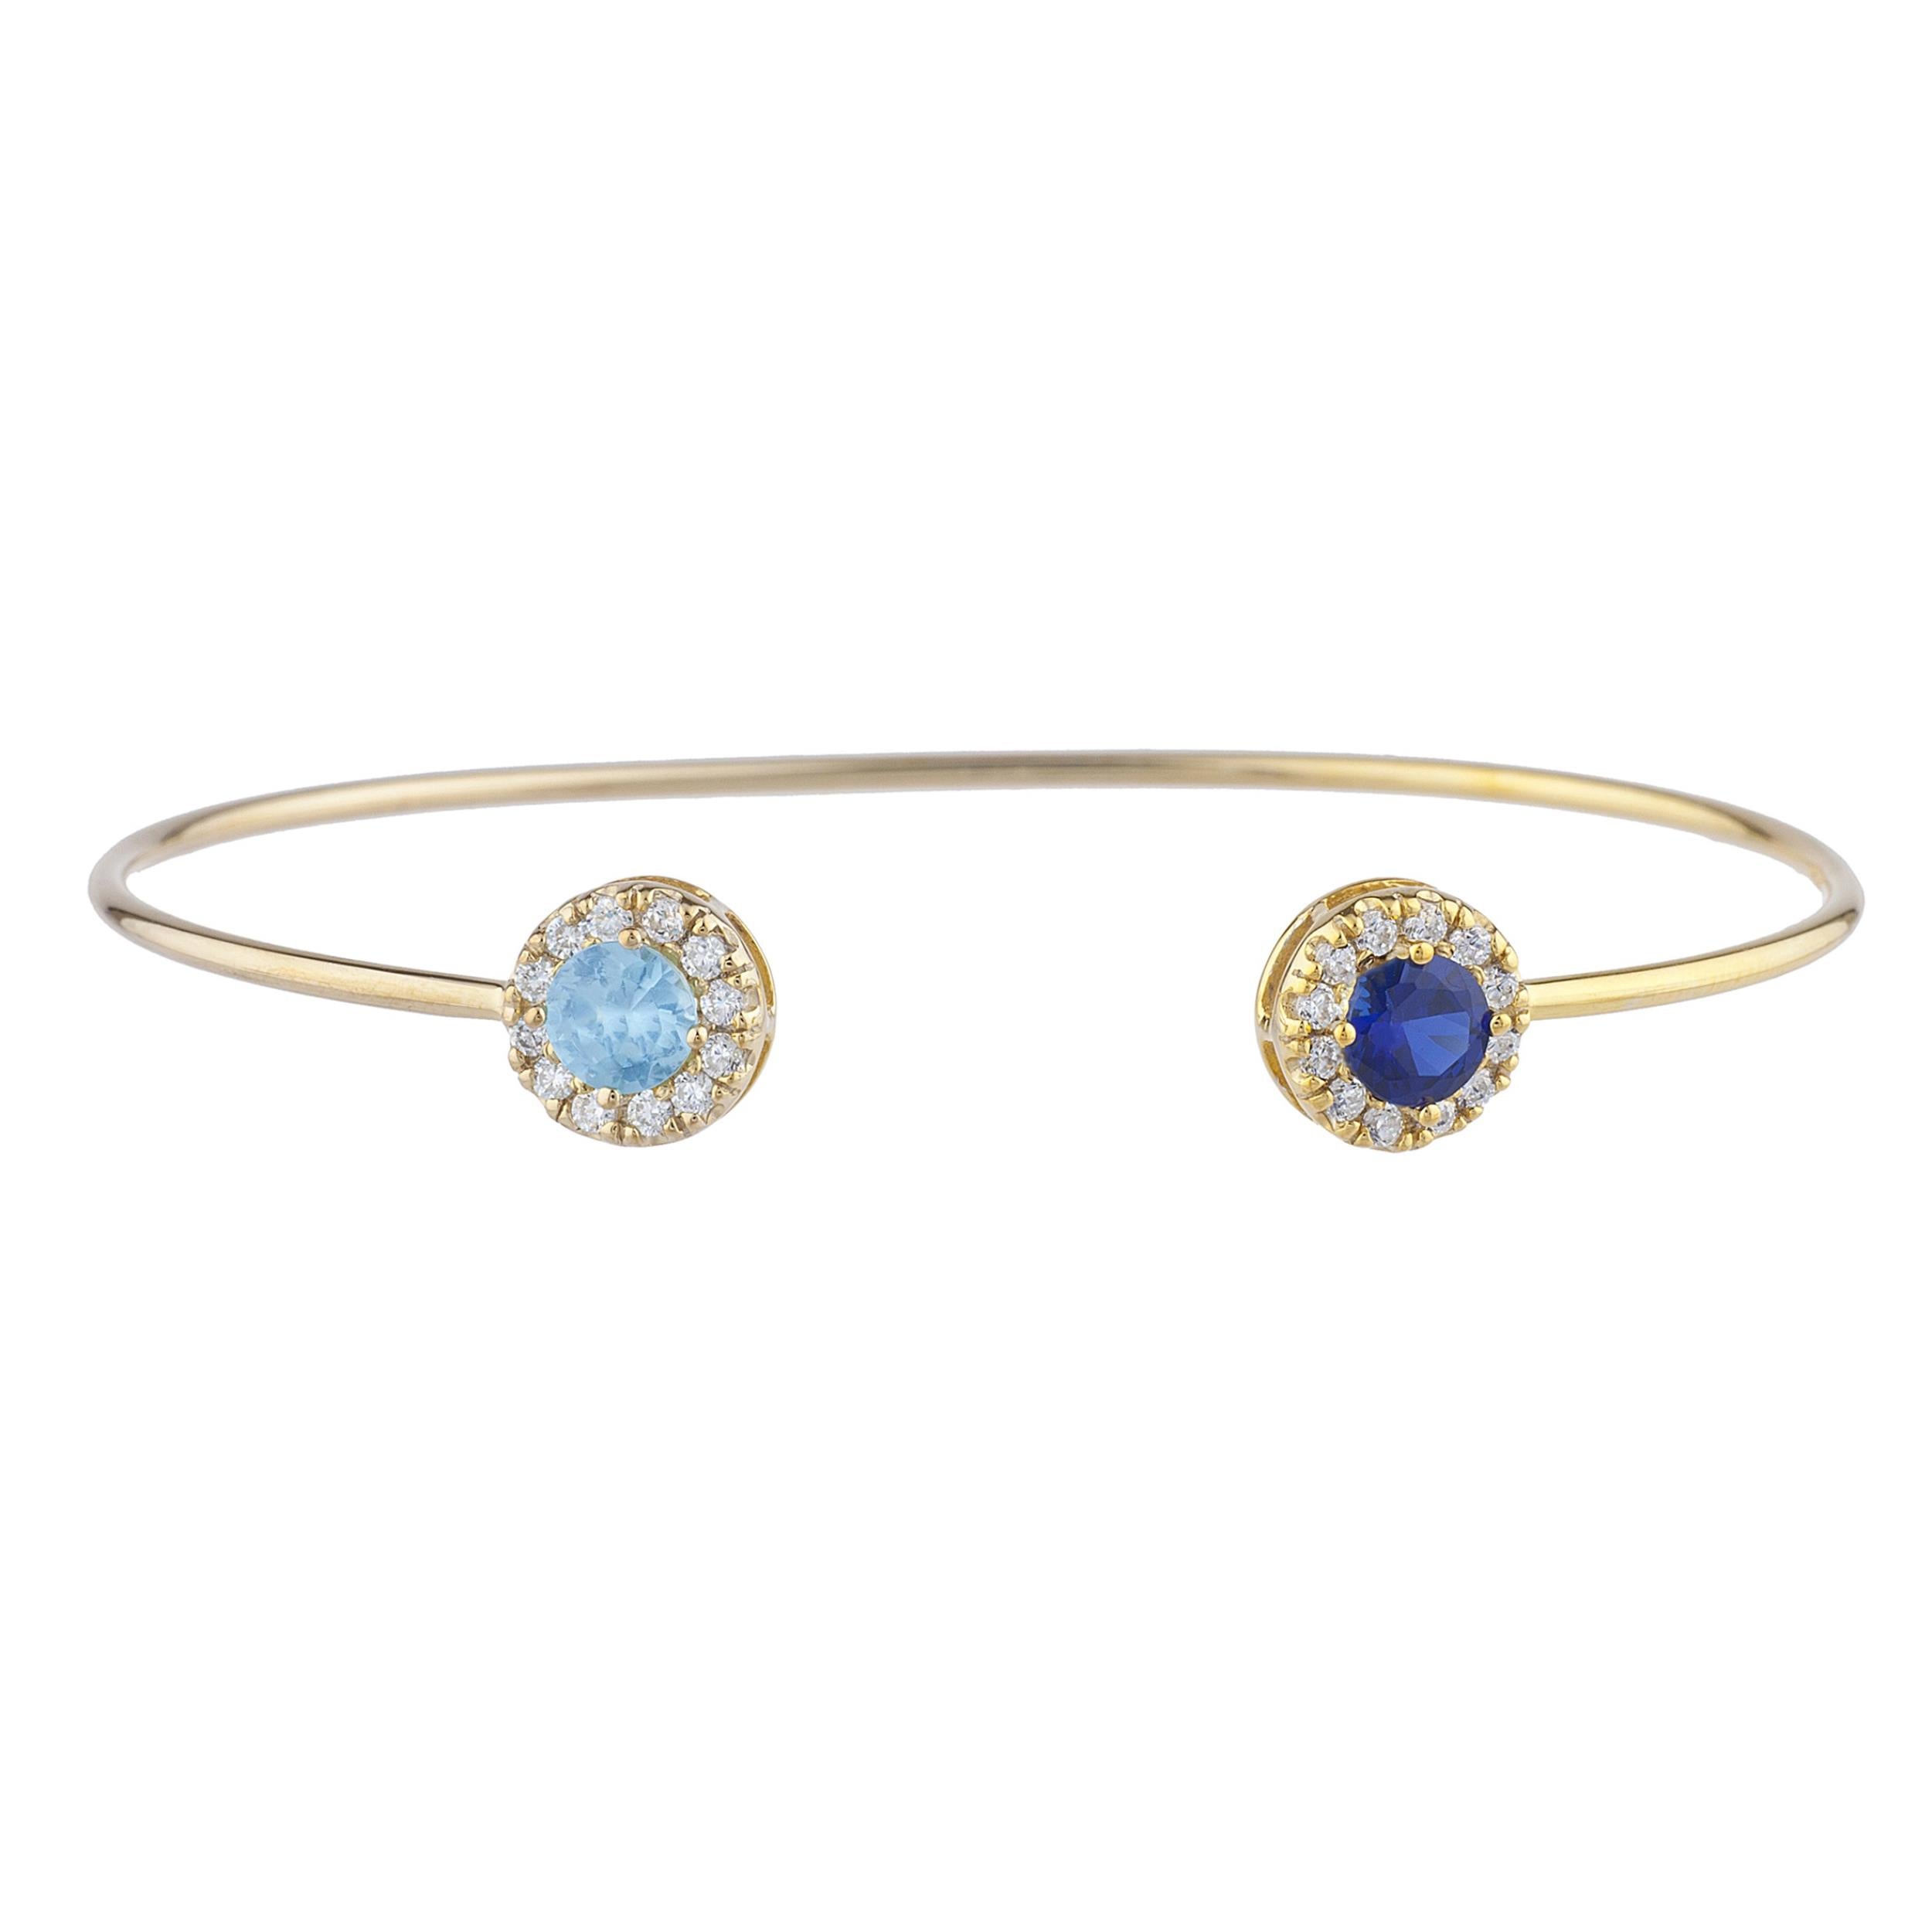 1 Ct Blue Sapphire & Blue Topaz Halo Design Round Bangle Bracelet 14Kt Yellow Gold Rose Gold Silver